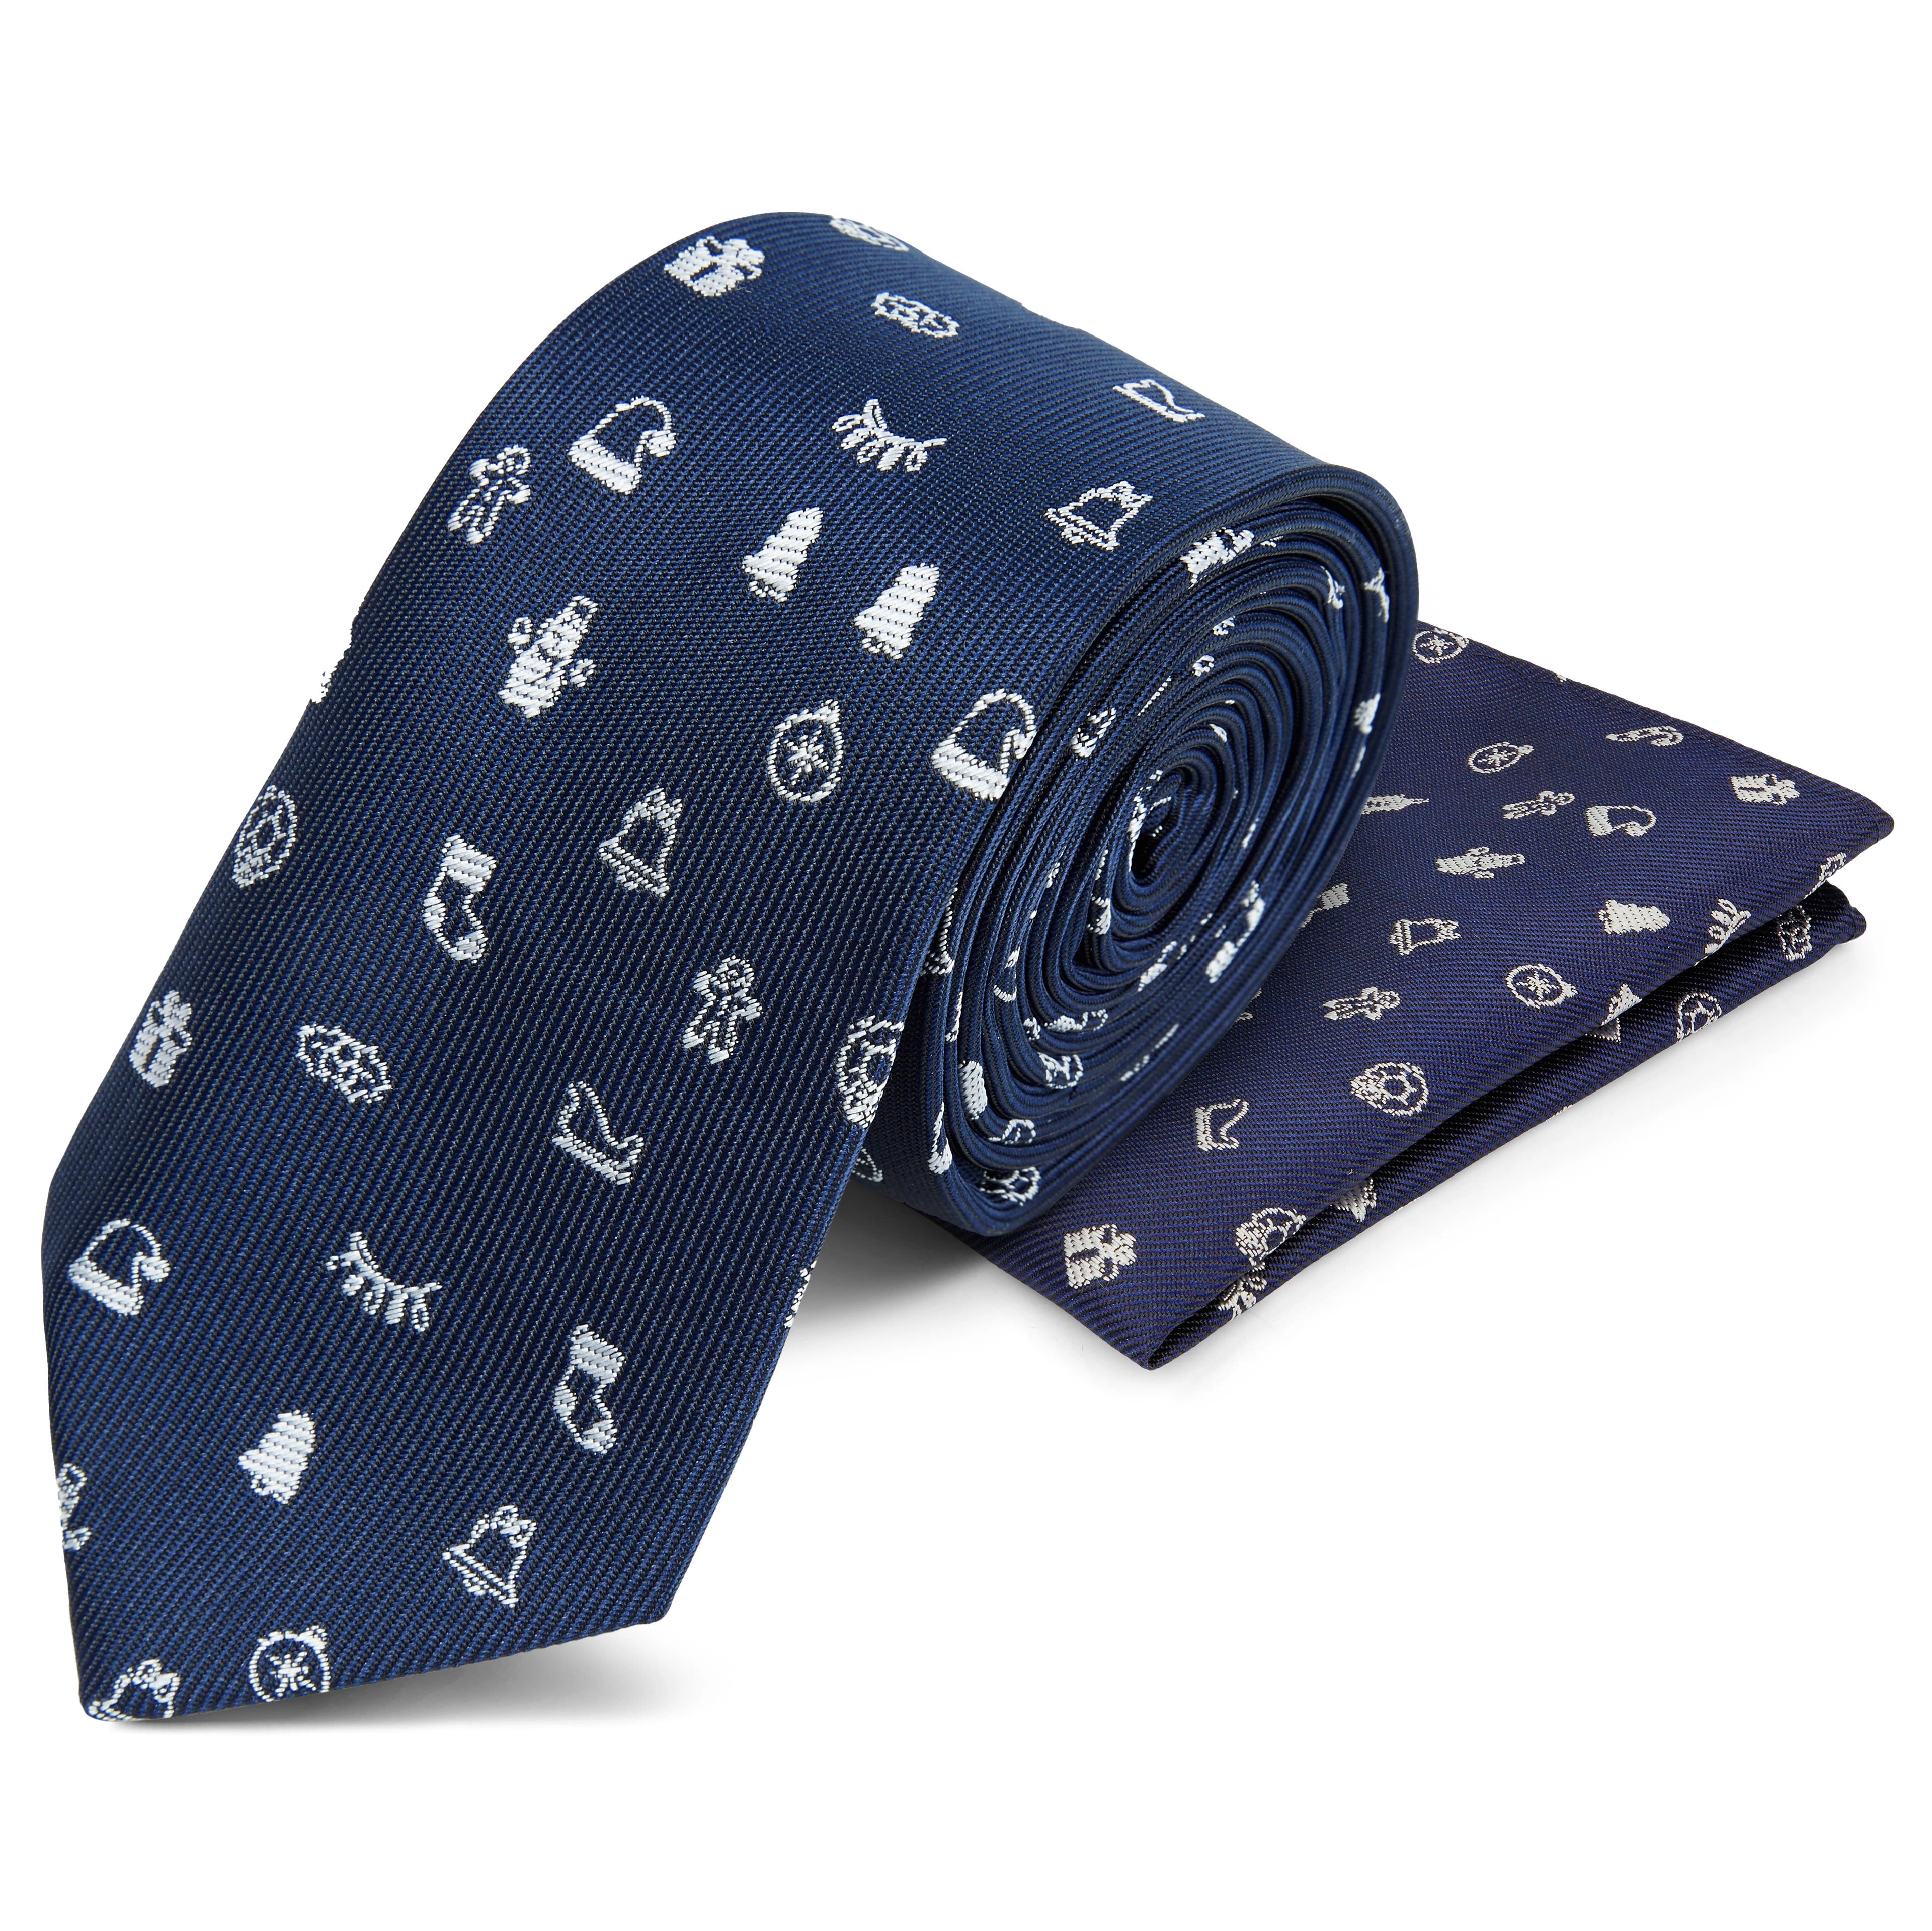 Corbata y pañuelo de bolsillo azul marino de Navidad